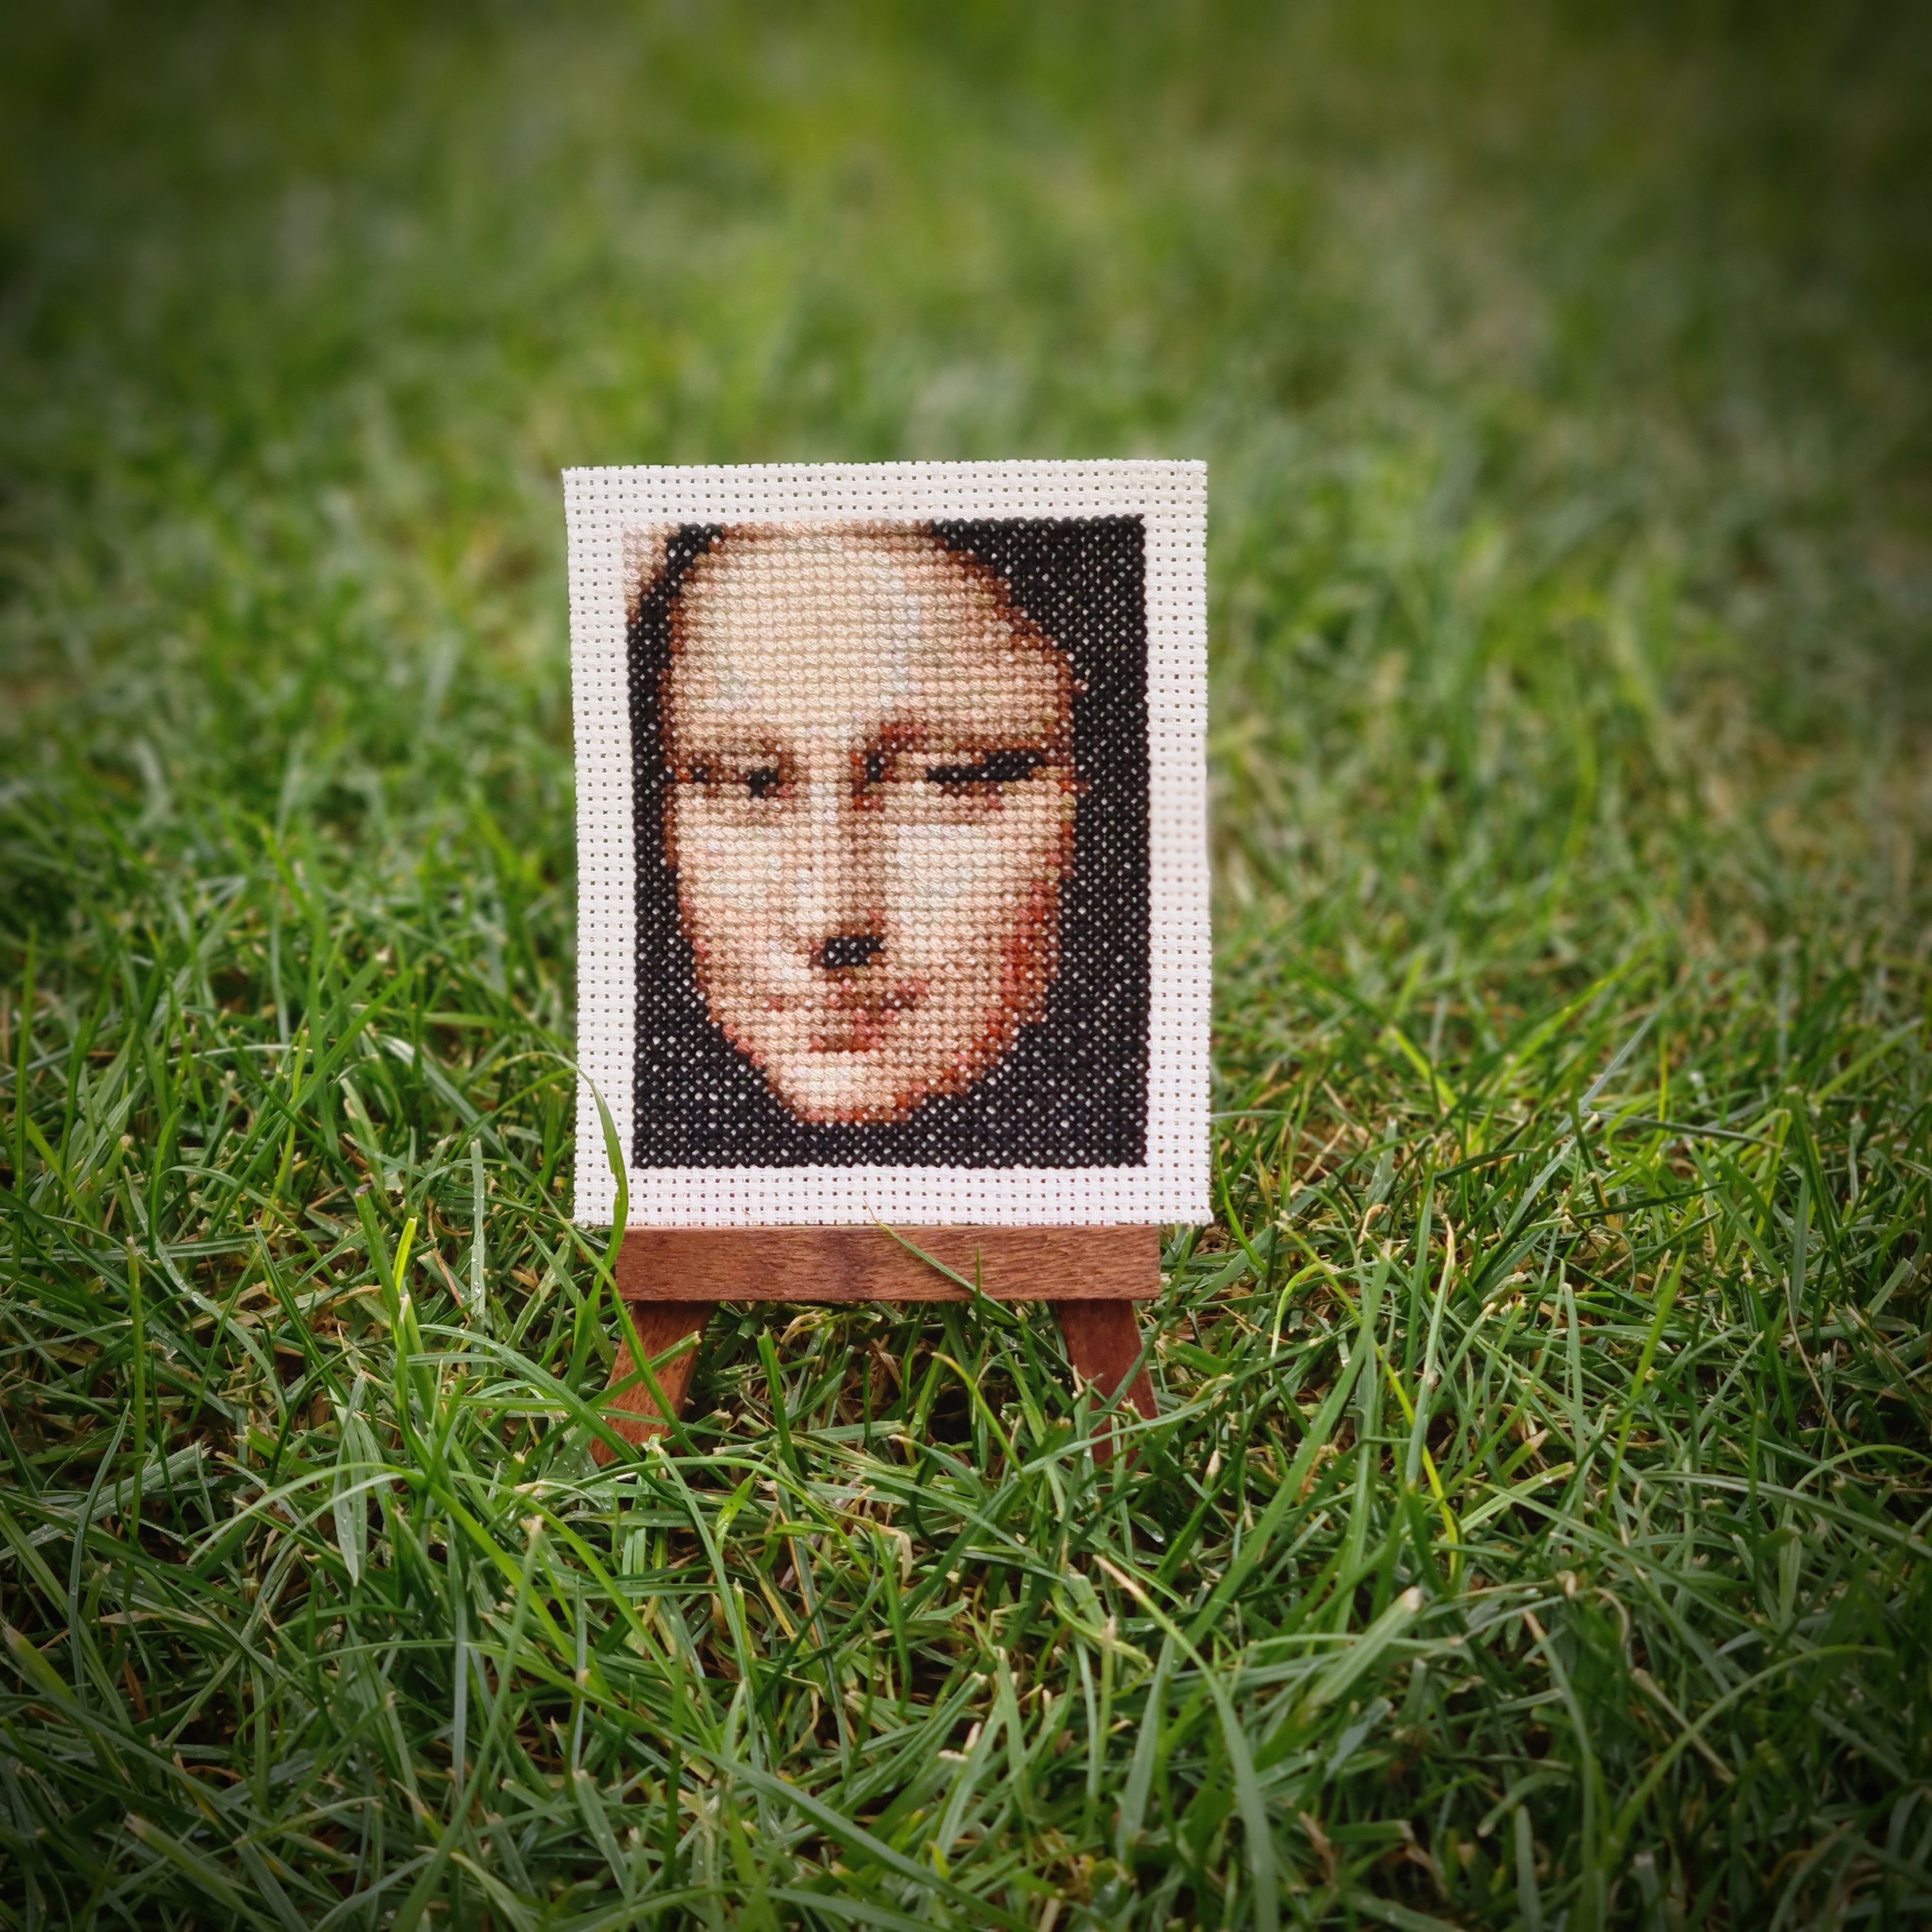 A recreation of "Mona Lisa" from Elçin Özcan